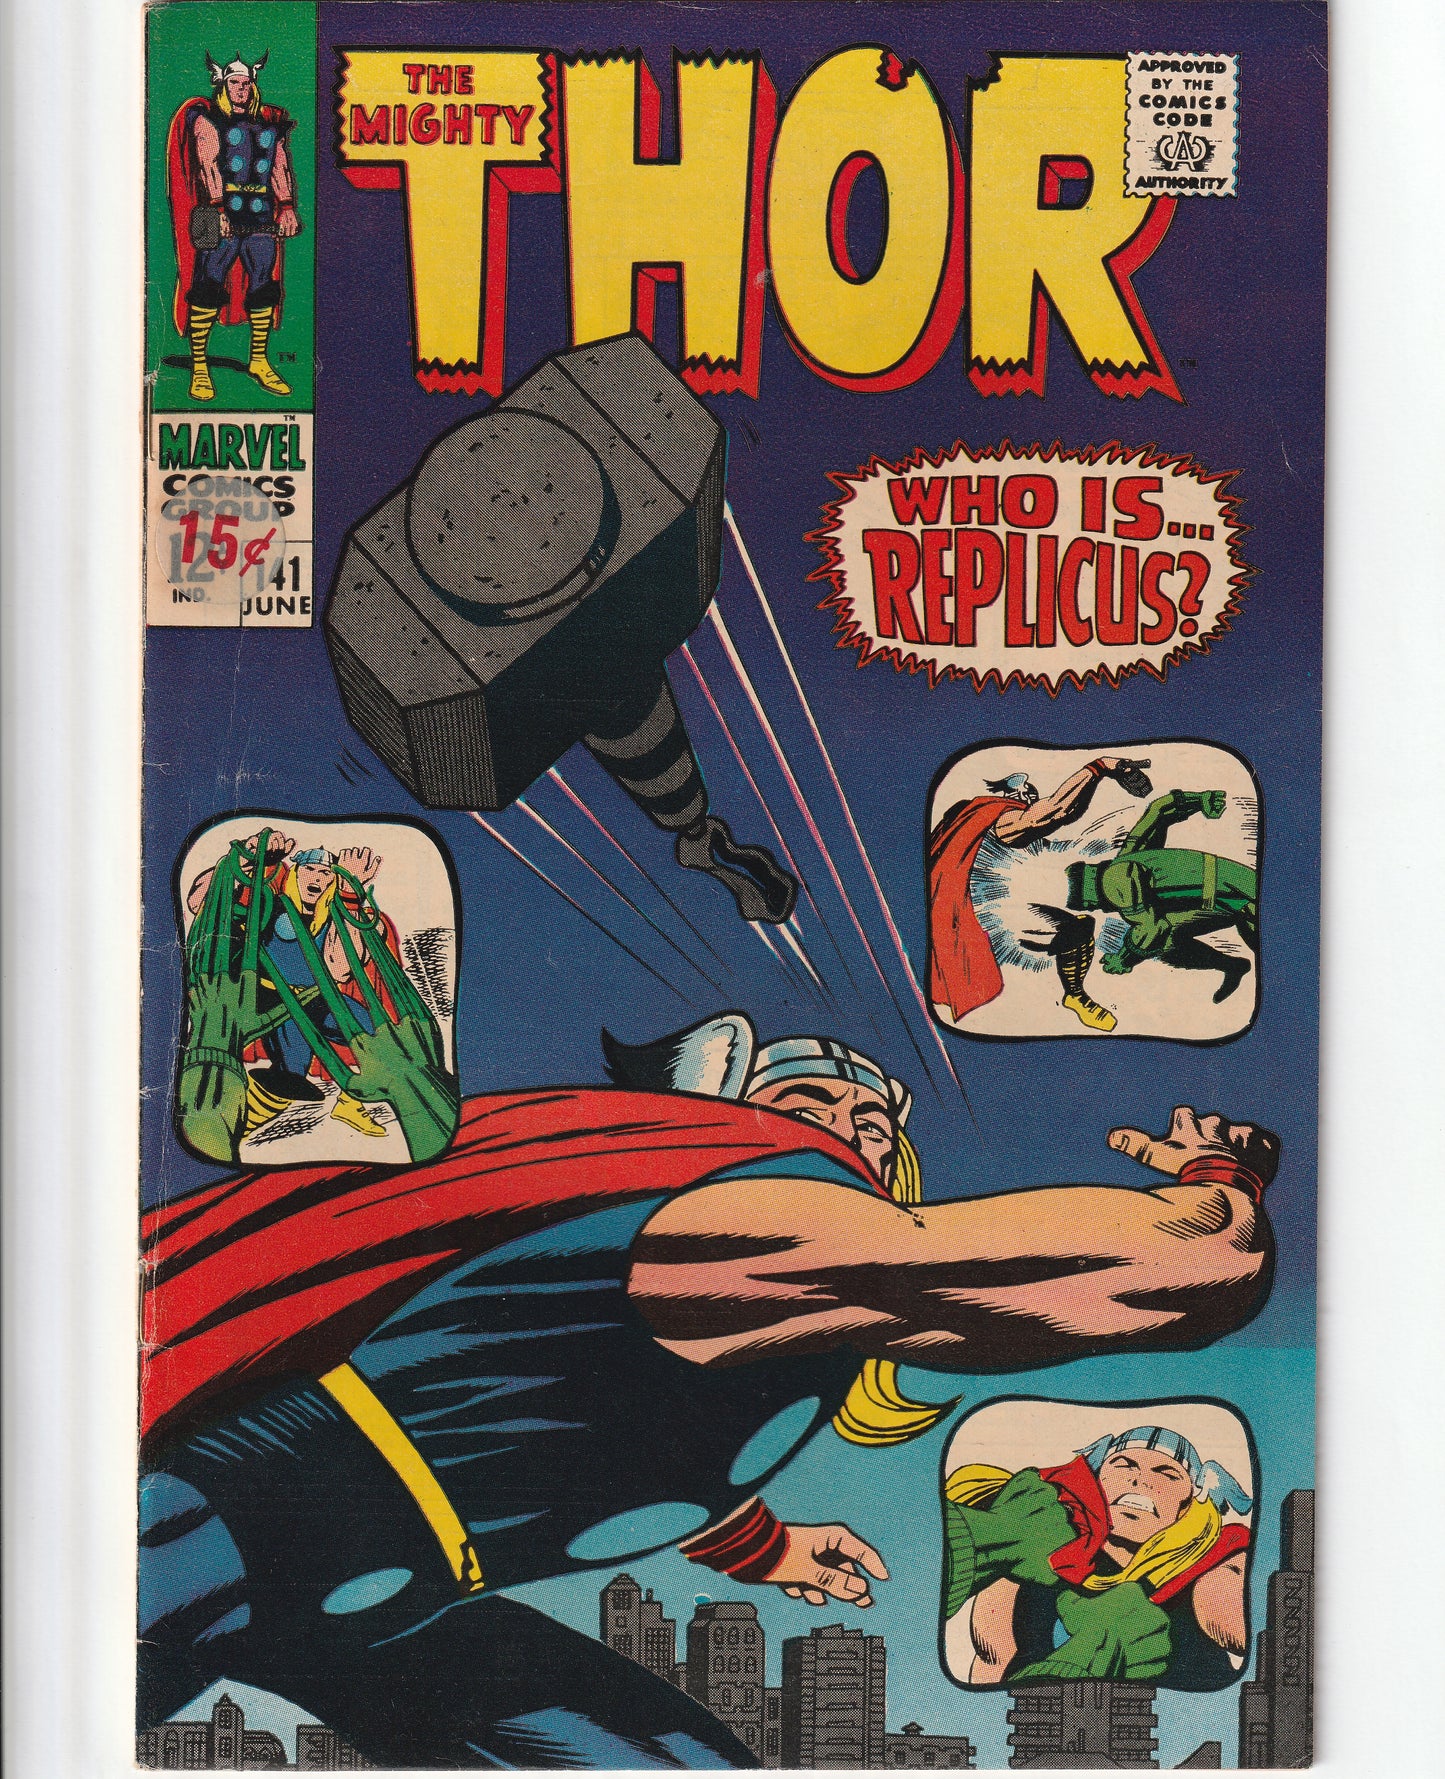 Thor #141 (1967)